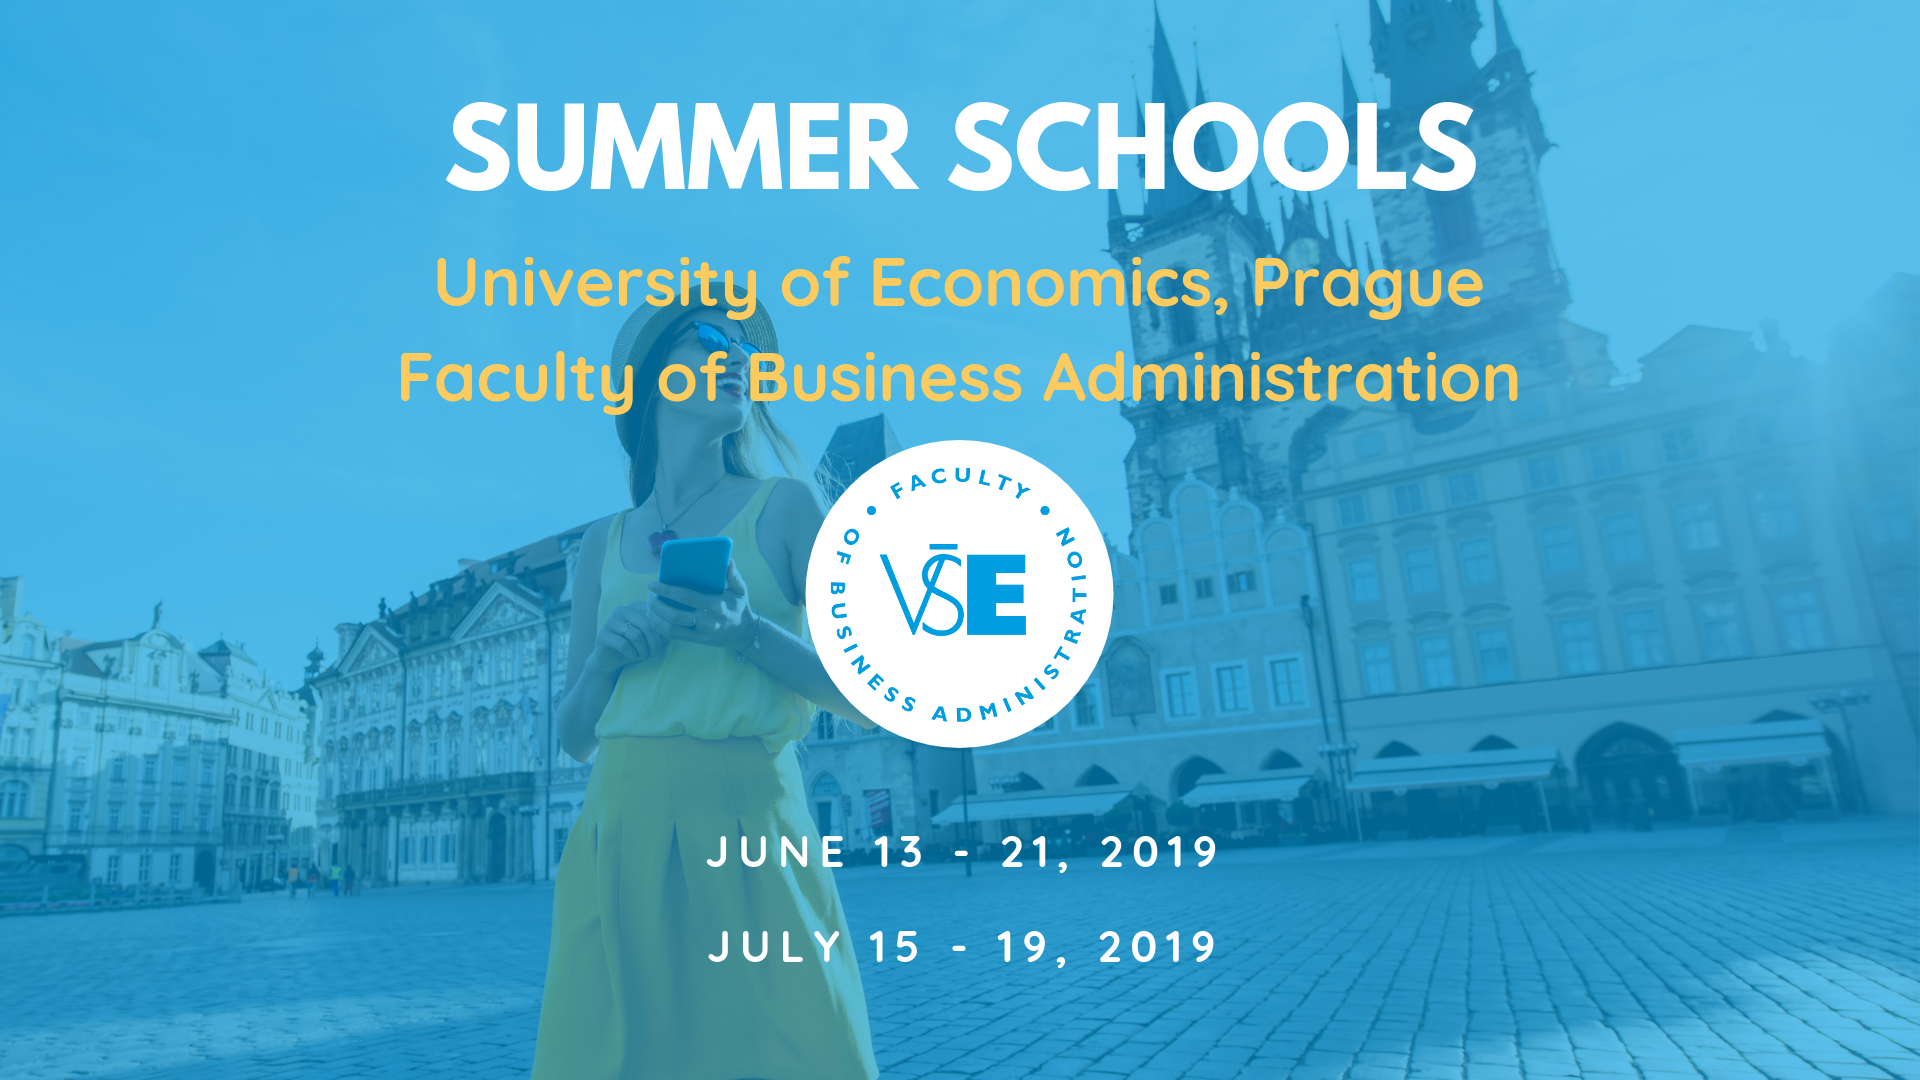 Summer Schools at the Universoty of Economics, Prague